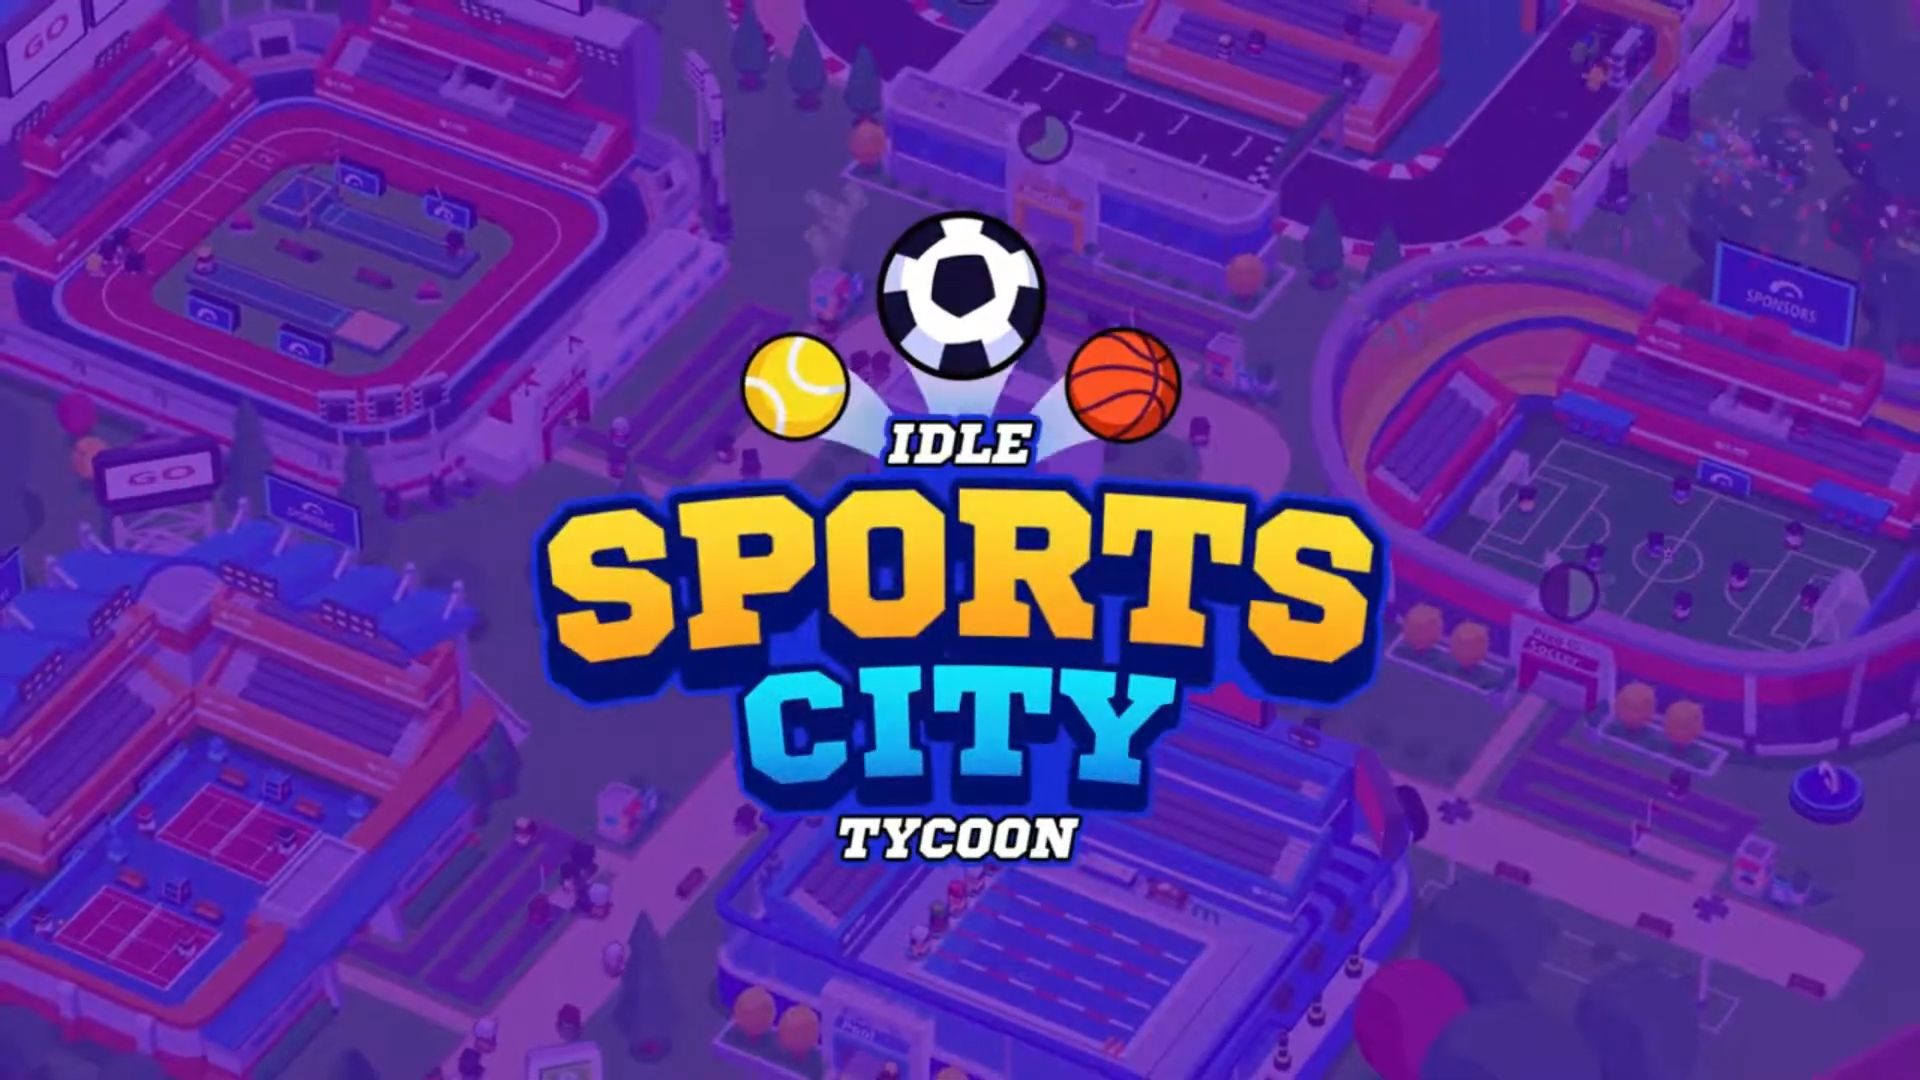 Sports City Tycoon - Idle Sports Games Simulator capture d'écran 1